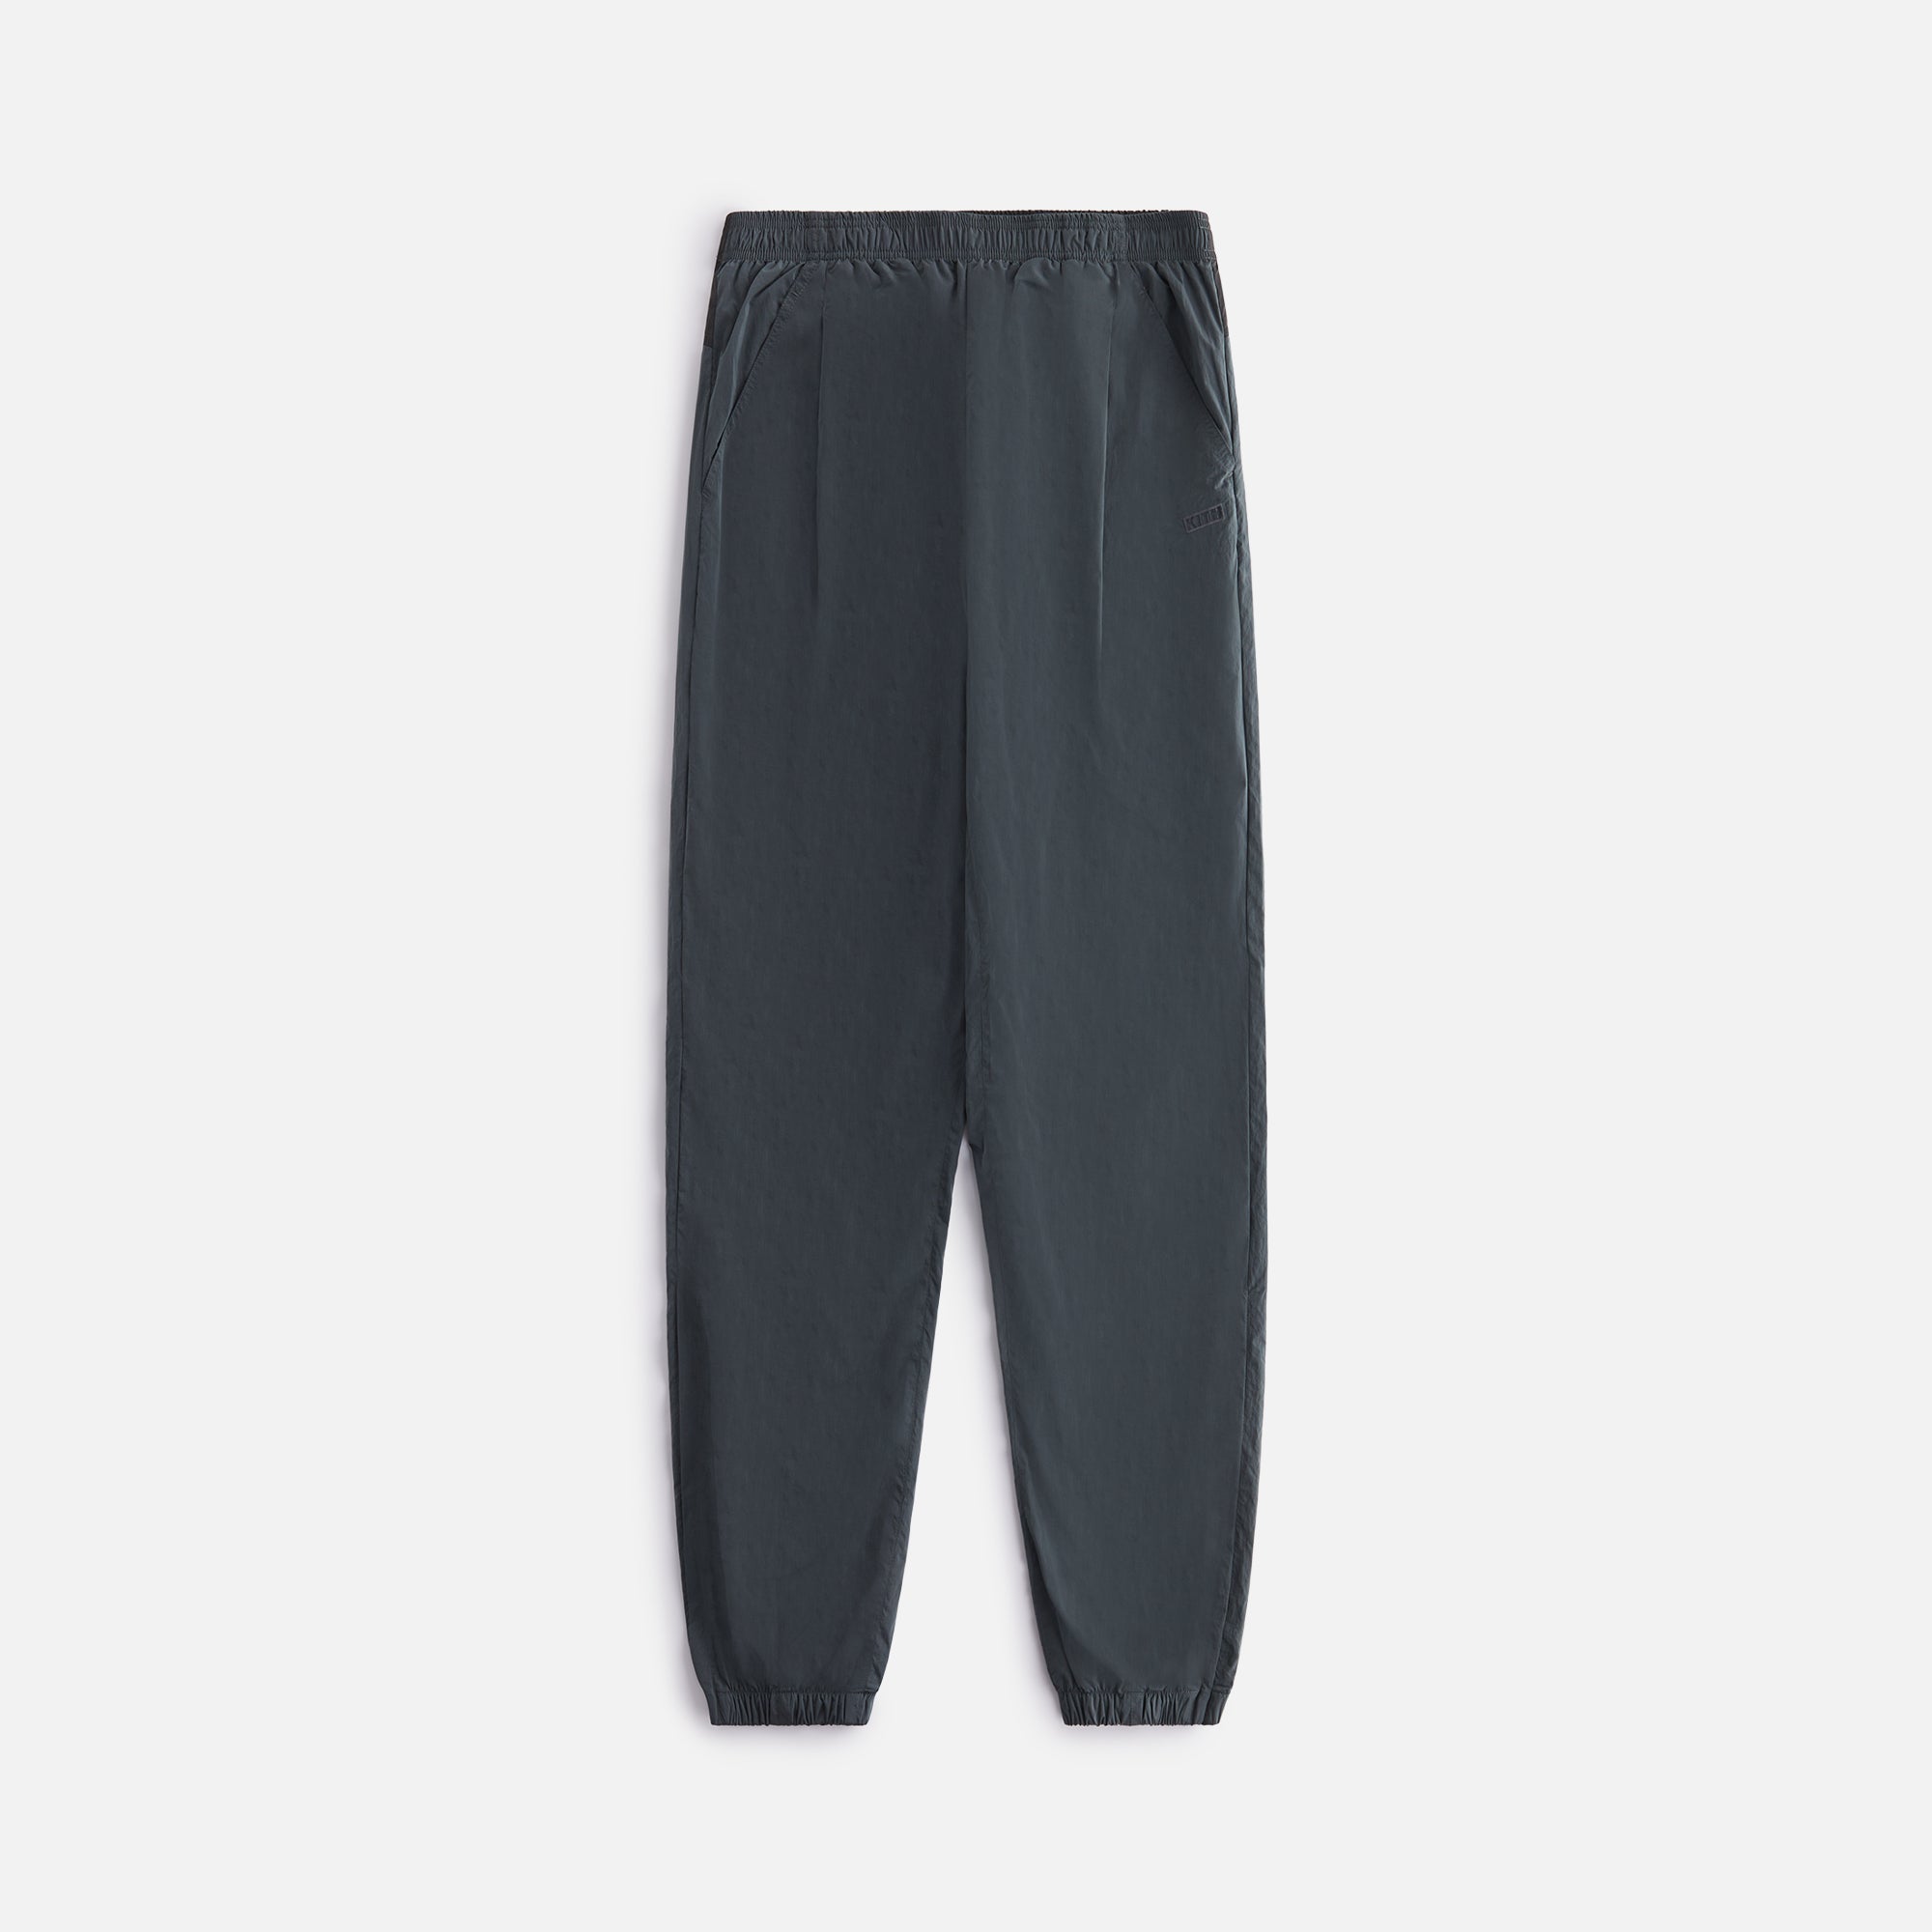 ASOS DESIGN baggy nylon track pants in black with gray side stripe | ASOS